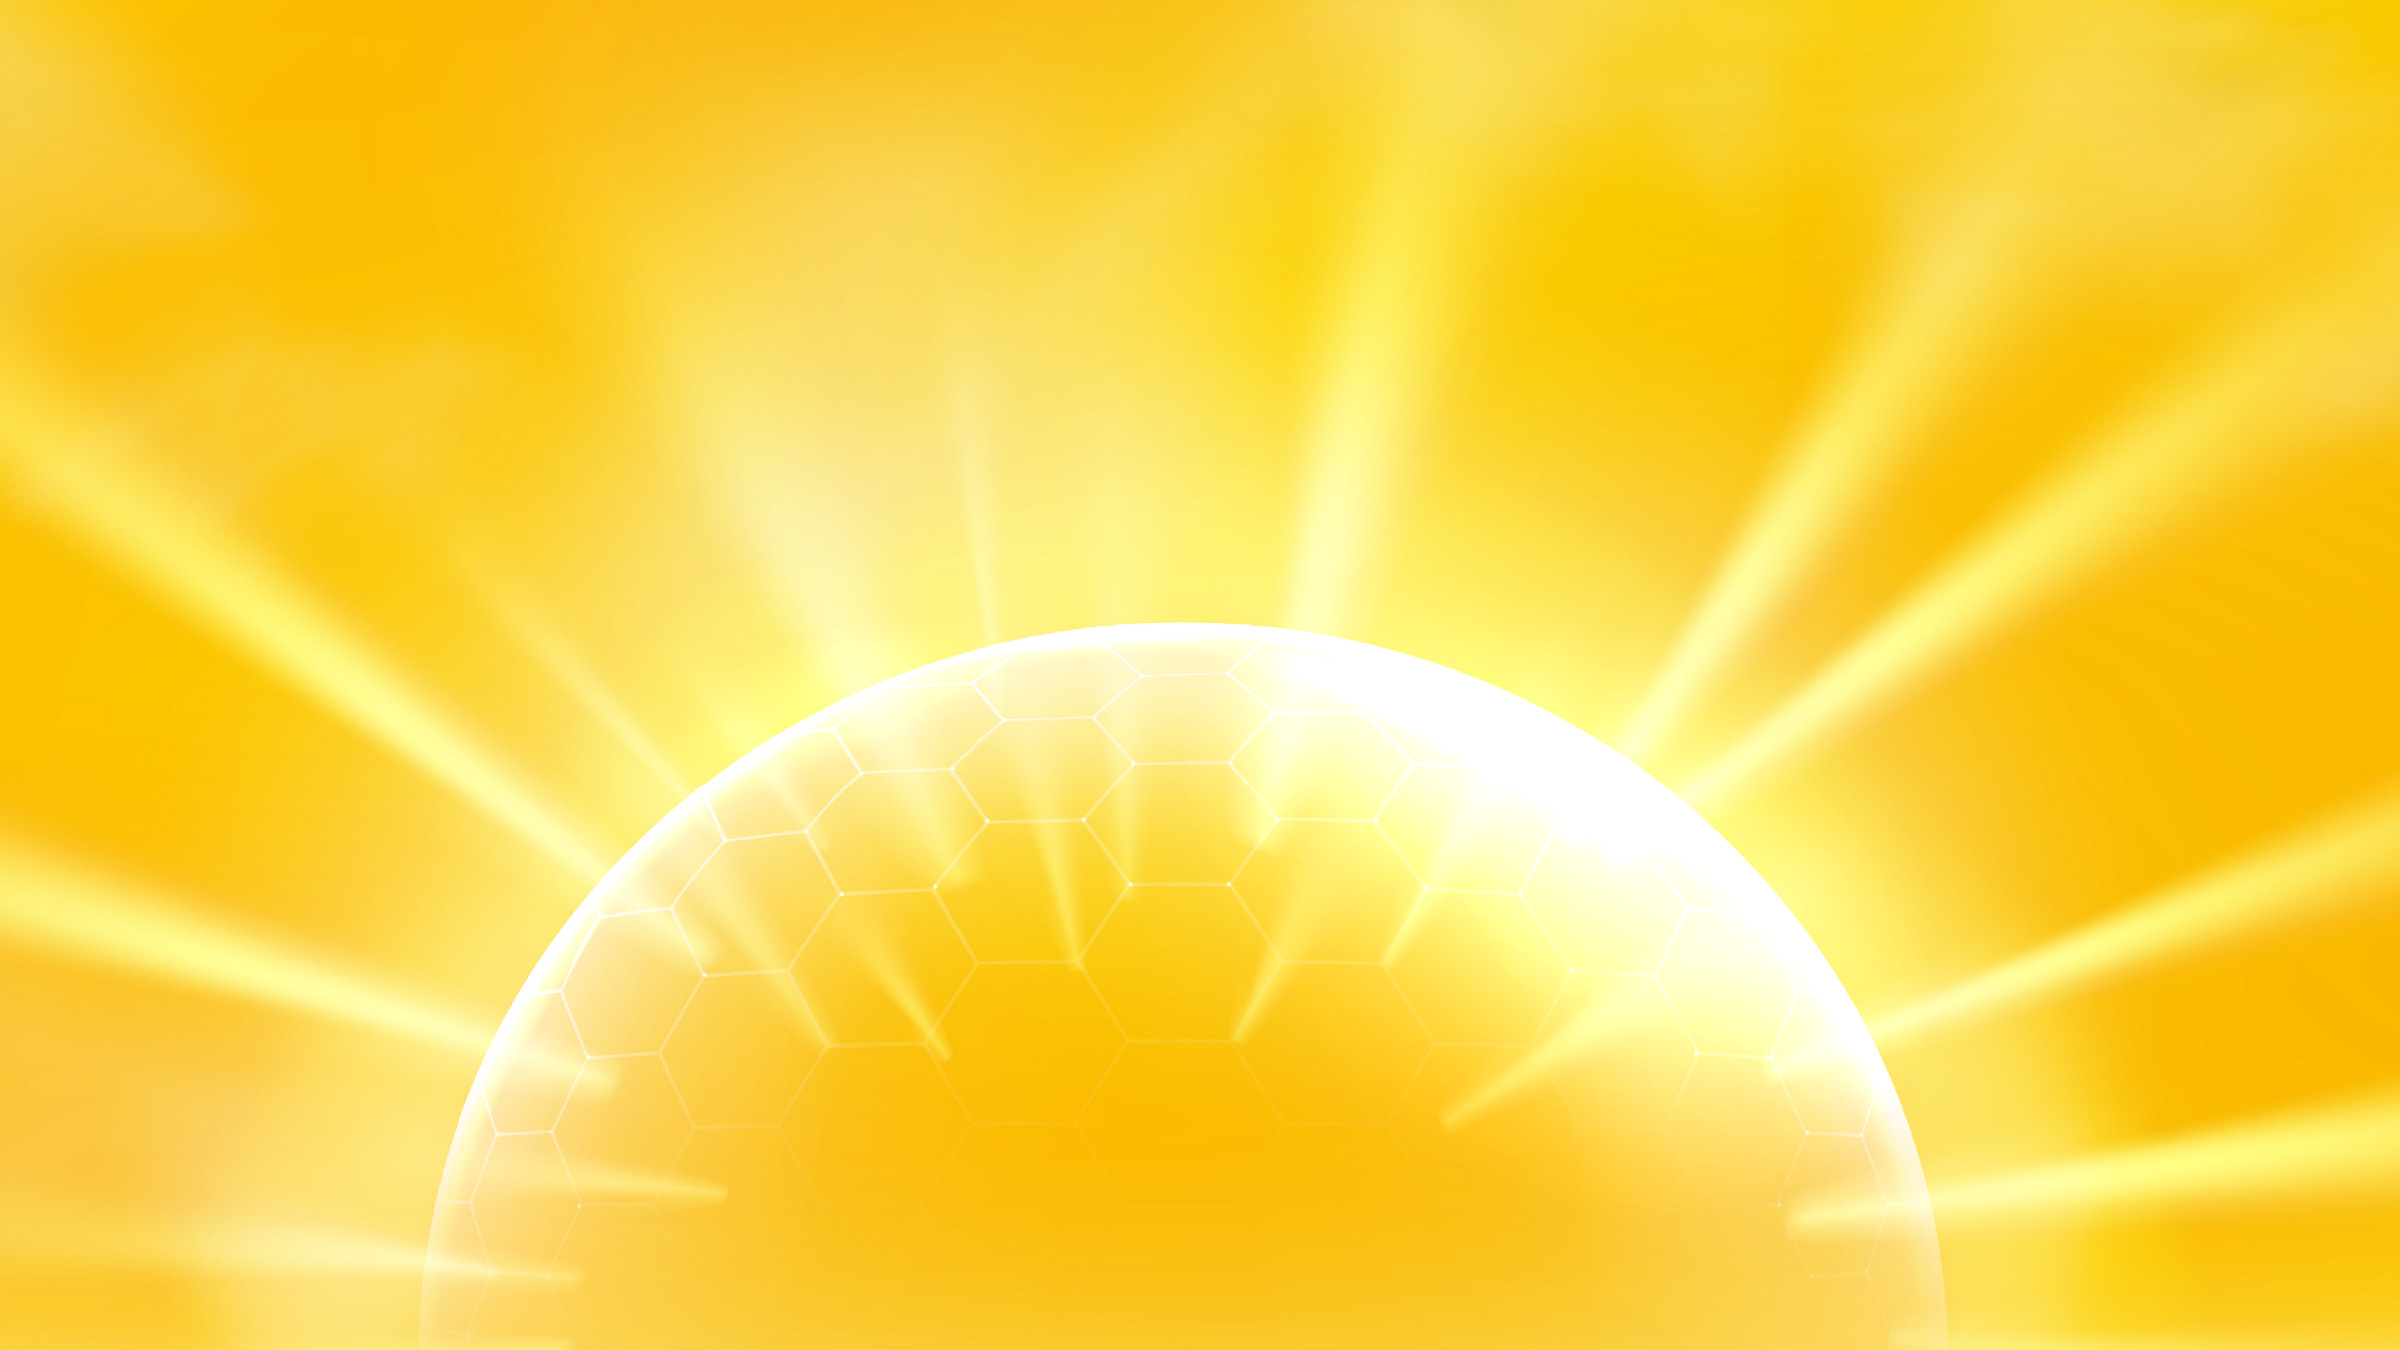 Credit: Shutterstock bright yellow sphere shield, illustration